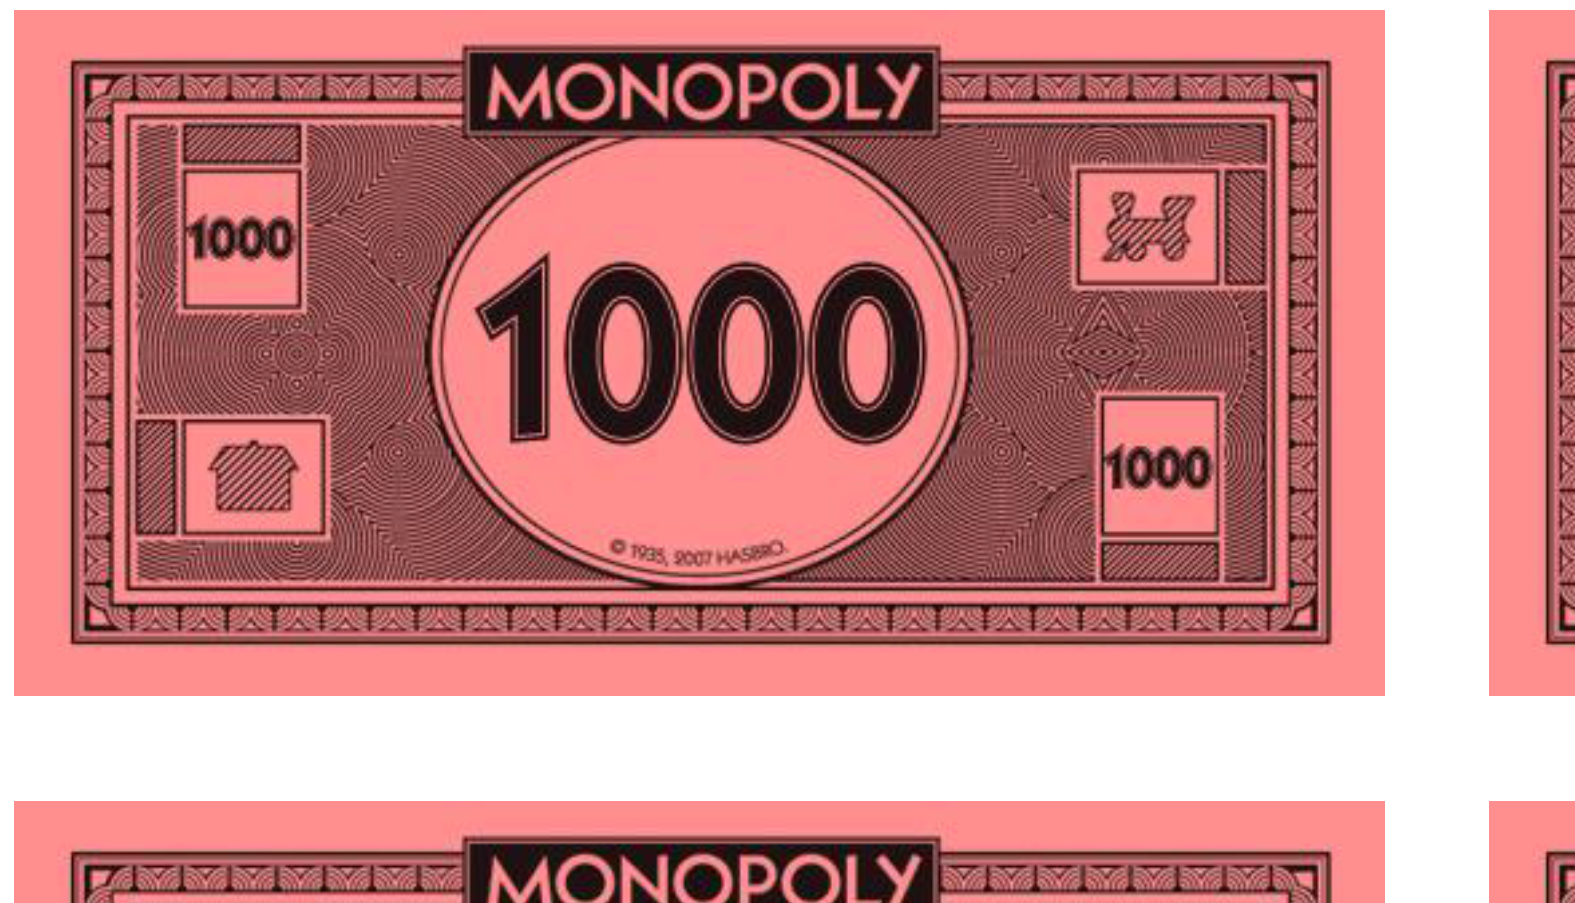 Monopoly Money 1000 Bill main image